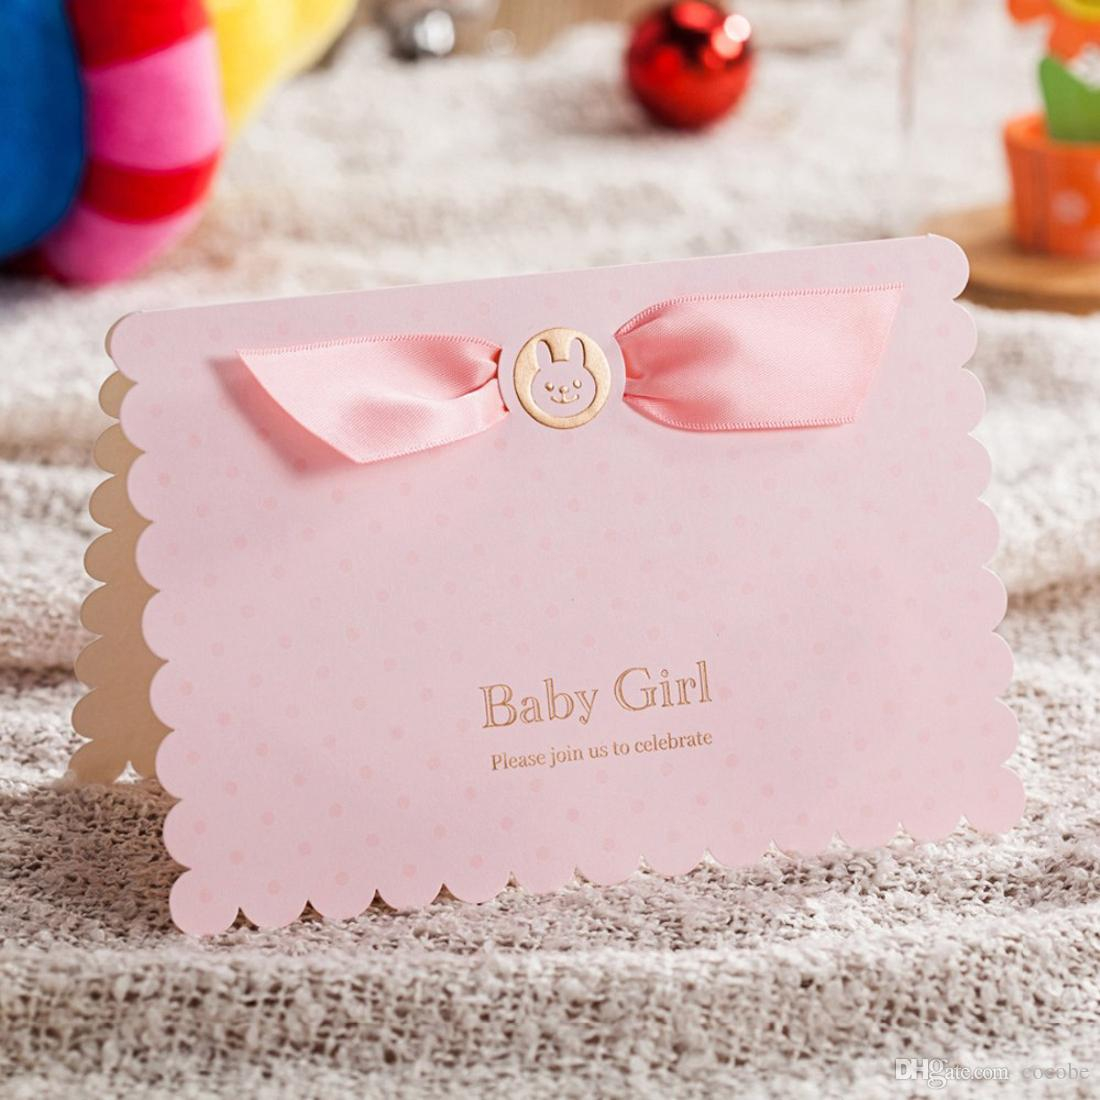 Handmade Birthday Invitation Cards Ideas Wishmade Pink Blue Ba Shower Invitation Cards With Cute Ba Car Invites Card Kit For Boy Girl Birthday Cw5301